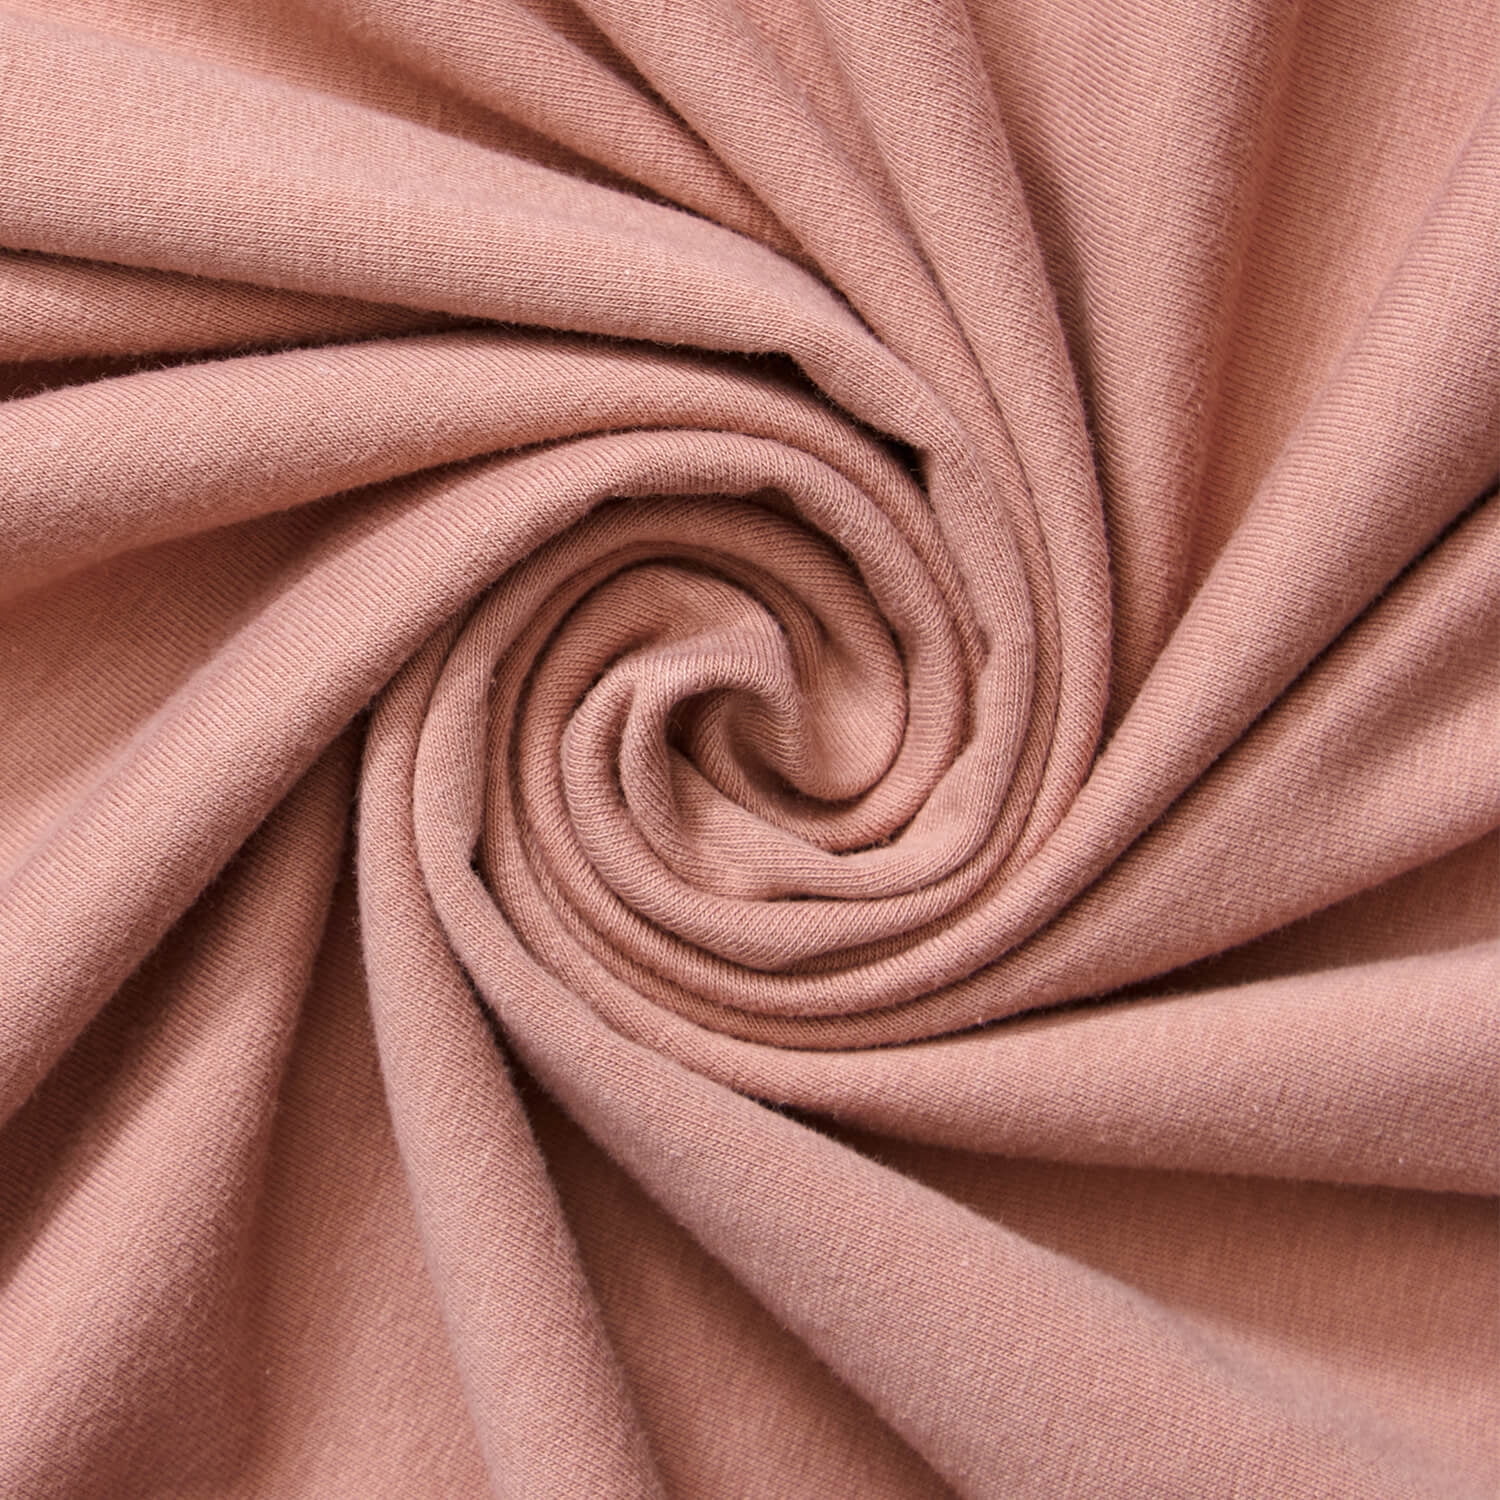 Cotton Jersey Lycra Spandex knit Stretch Fabric 58/60 wide